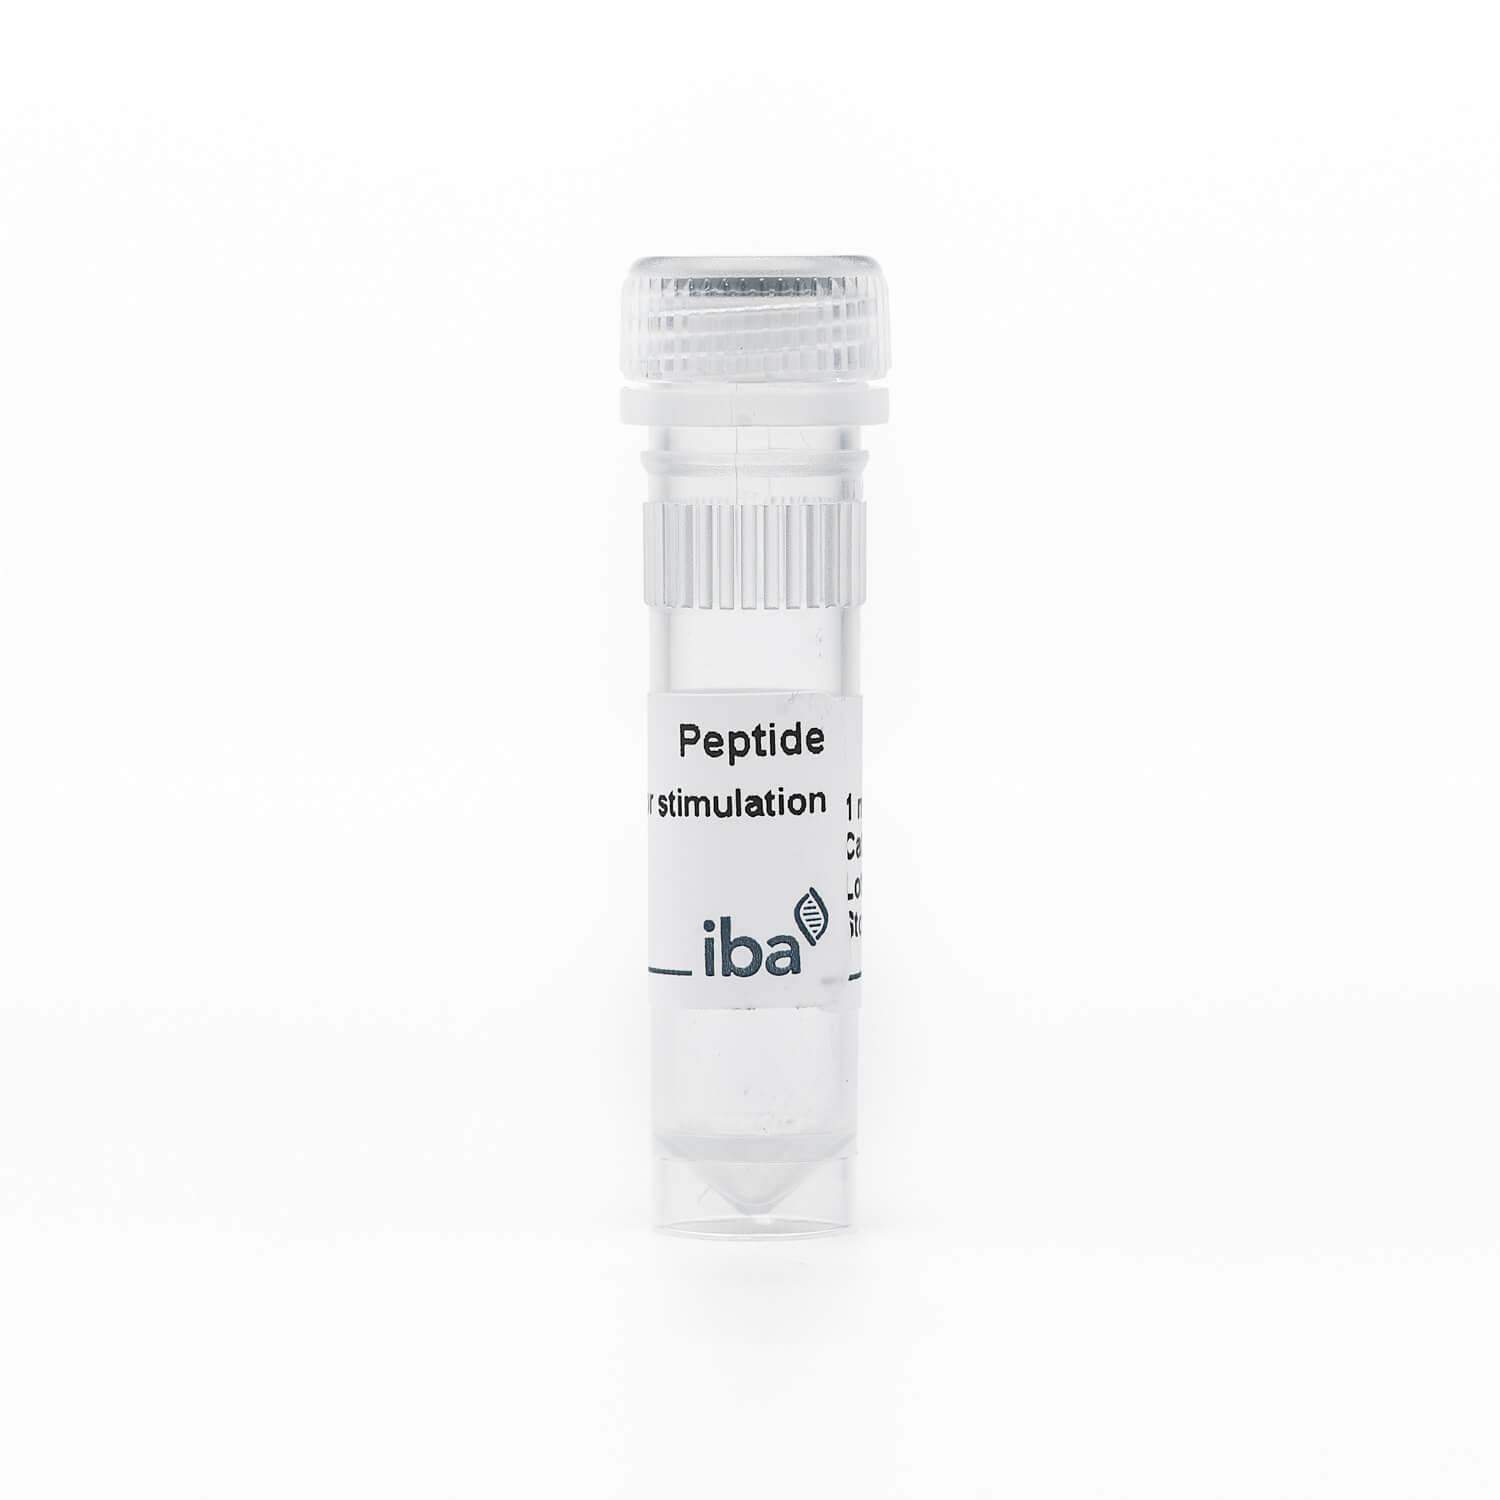 PPI (2-10) peptide ALWMRLLPL (HLA-A*0201)